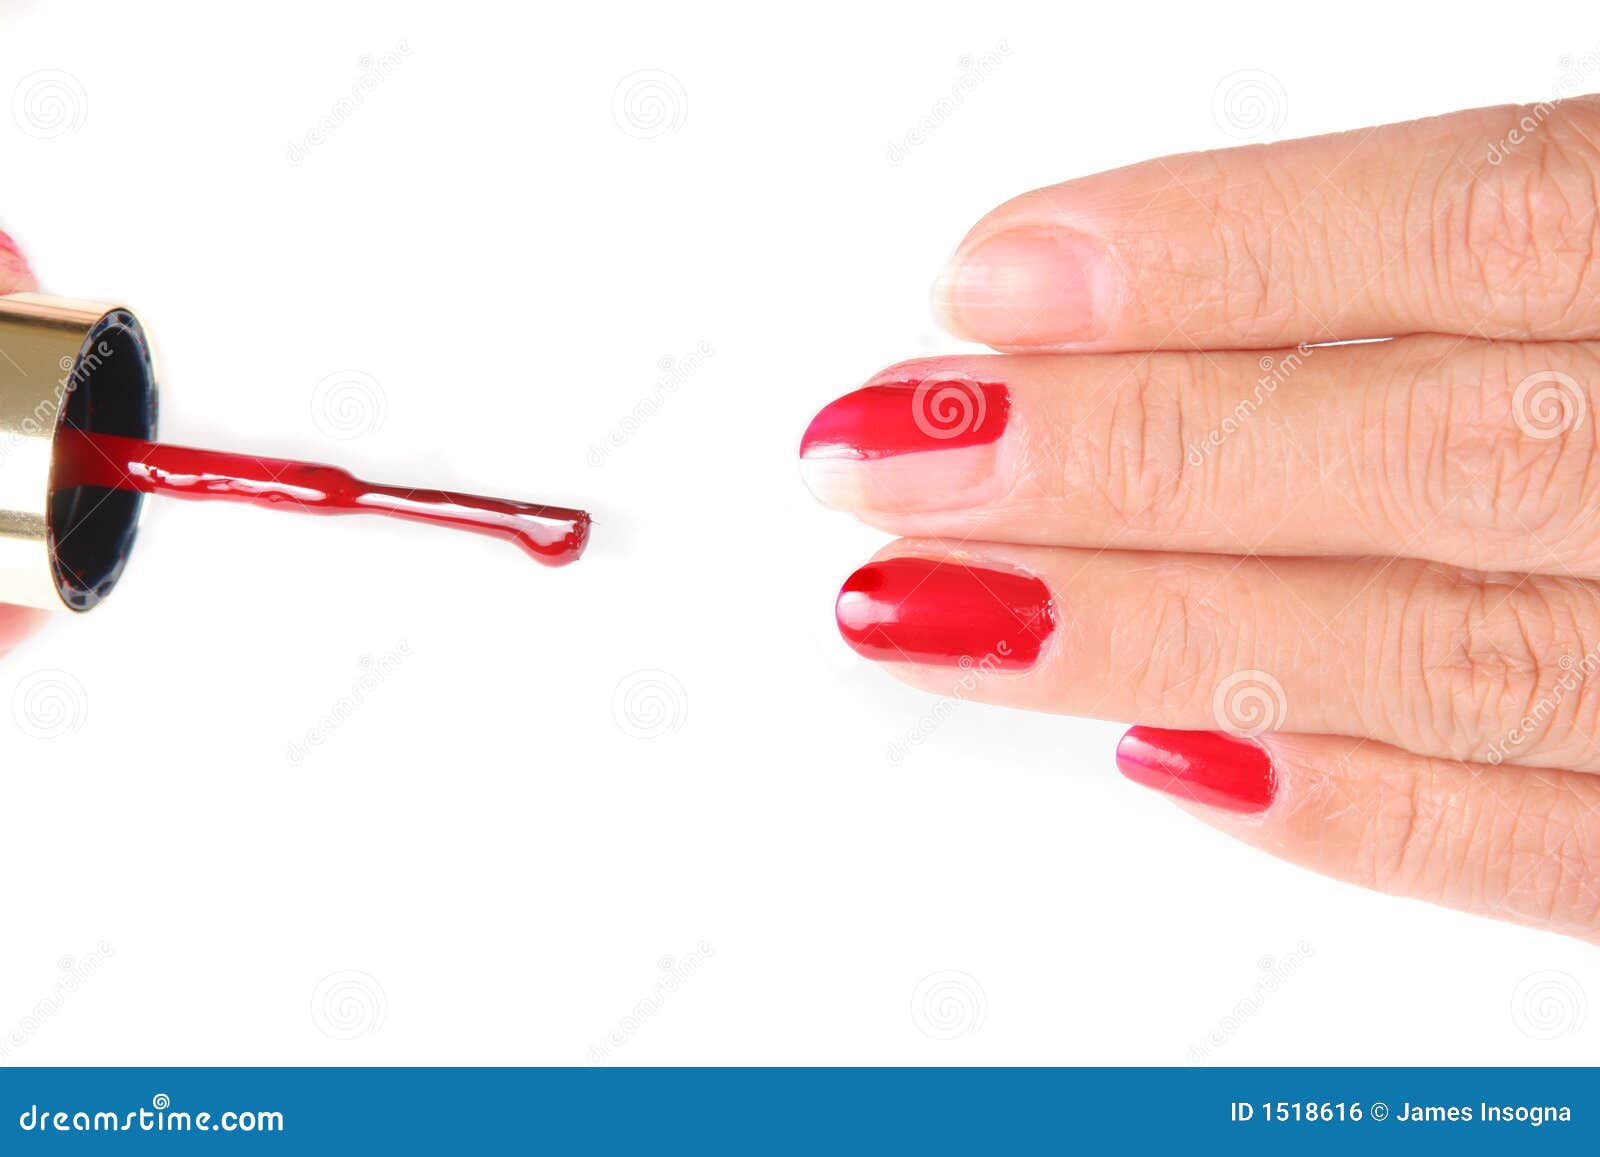 painted nails clip art - photo #9